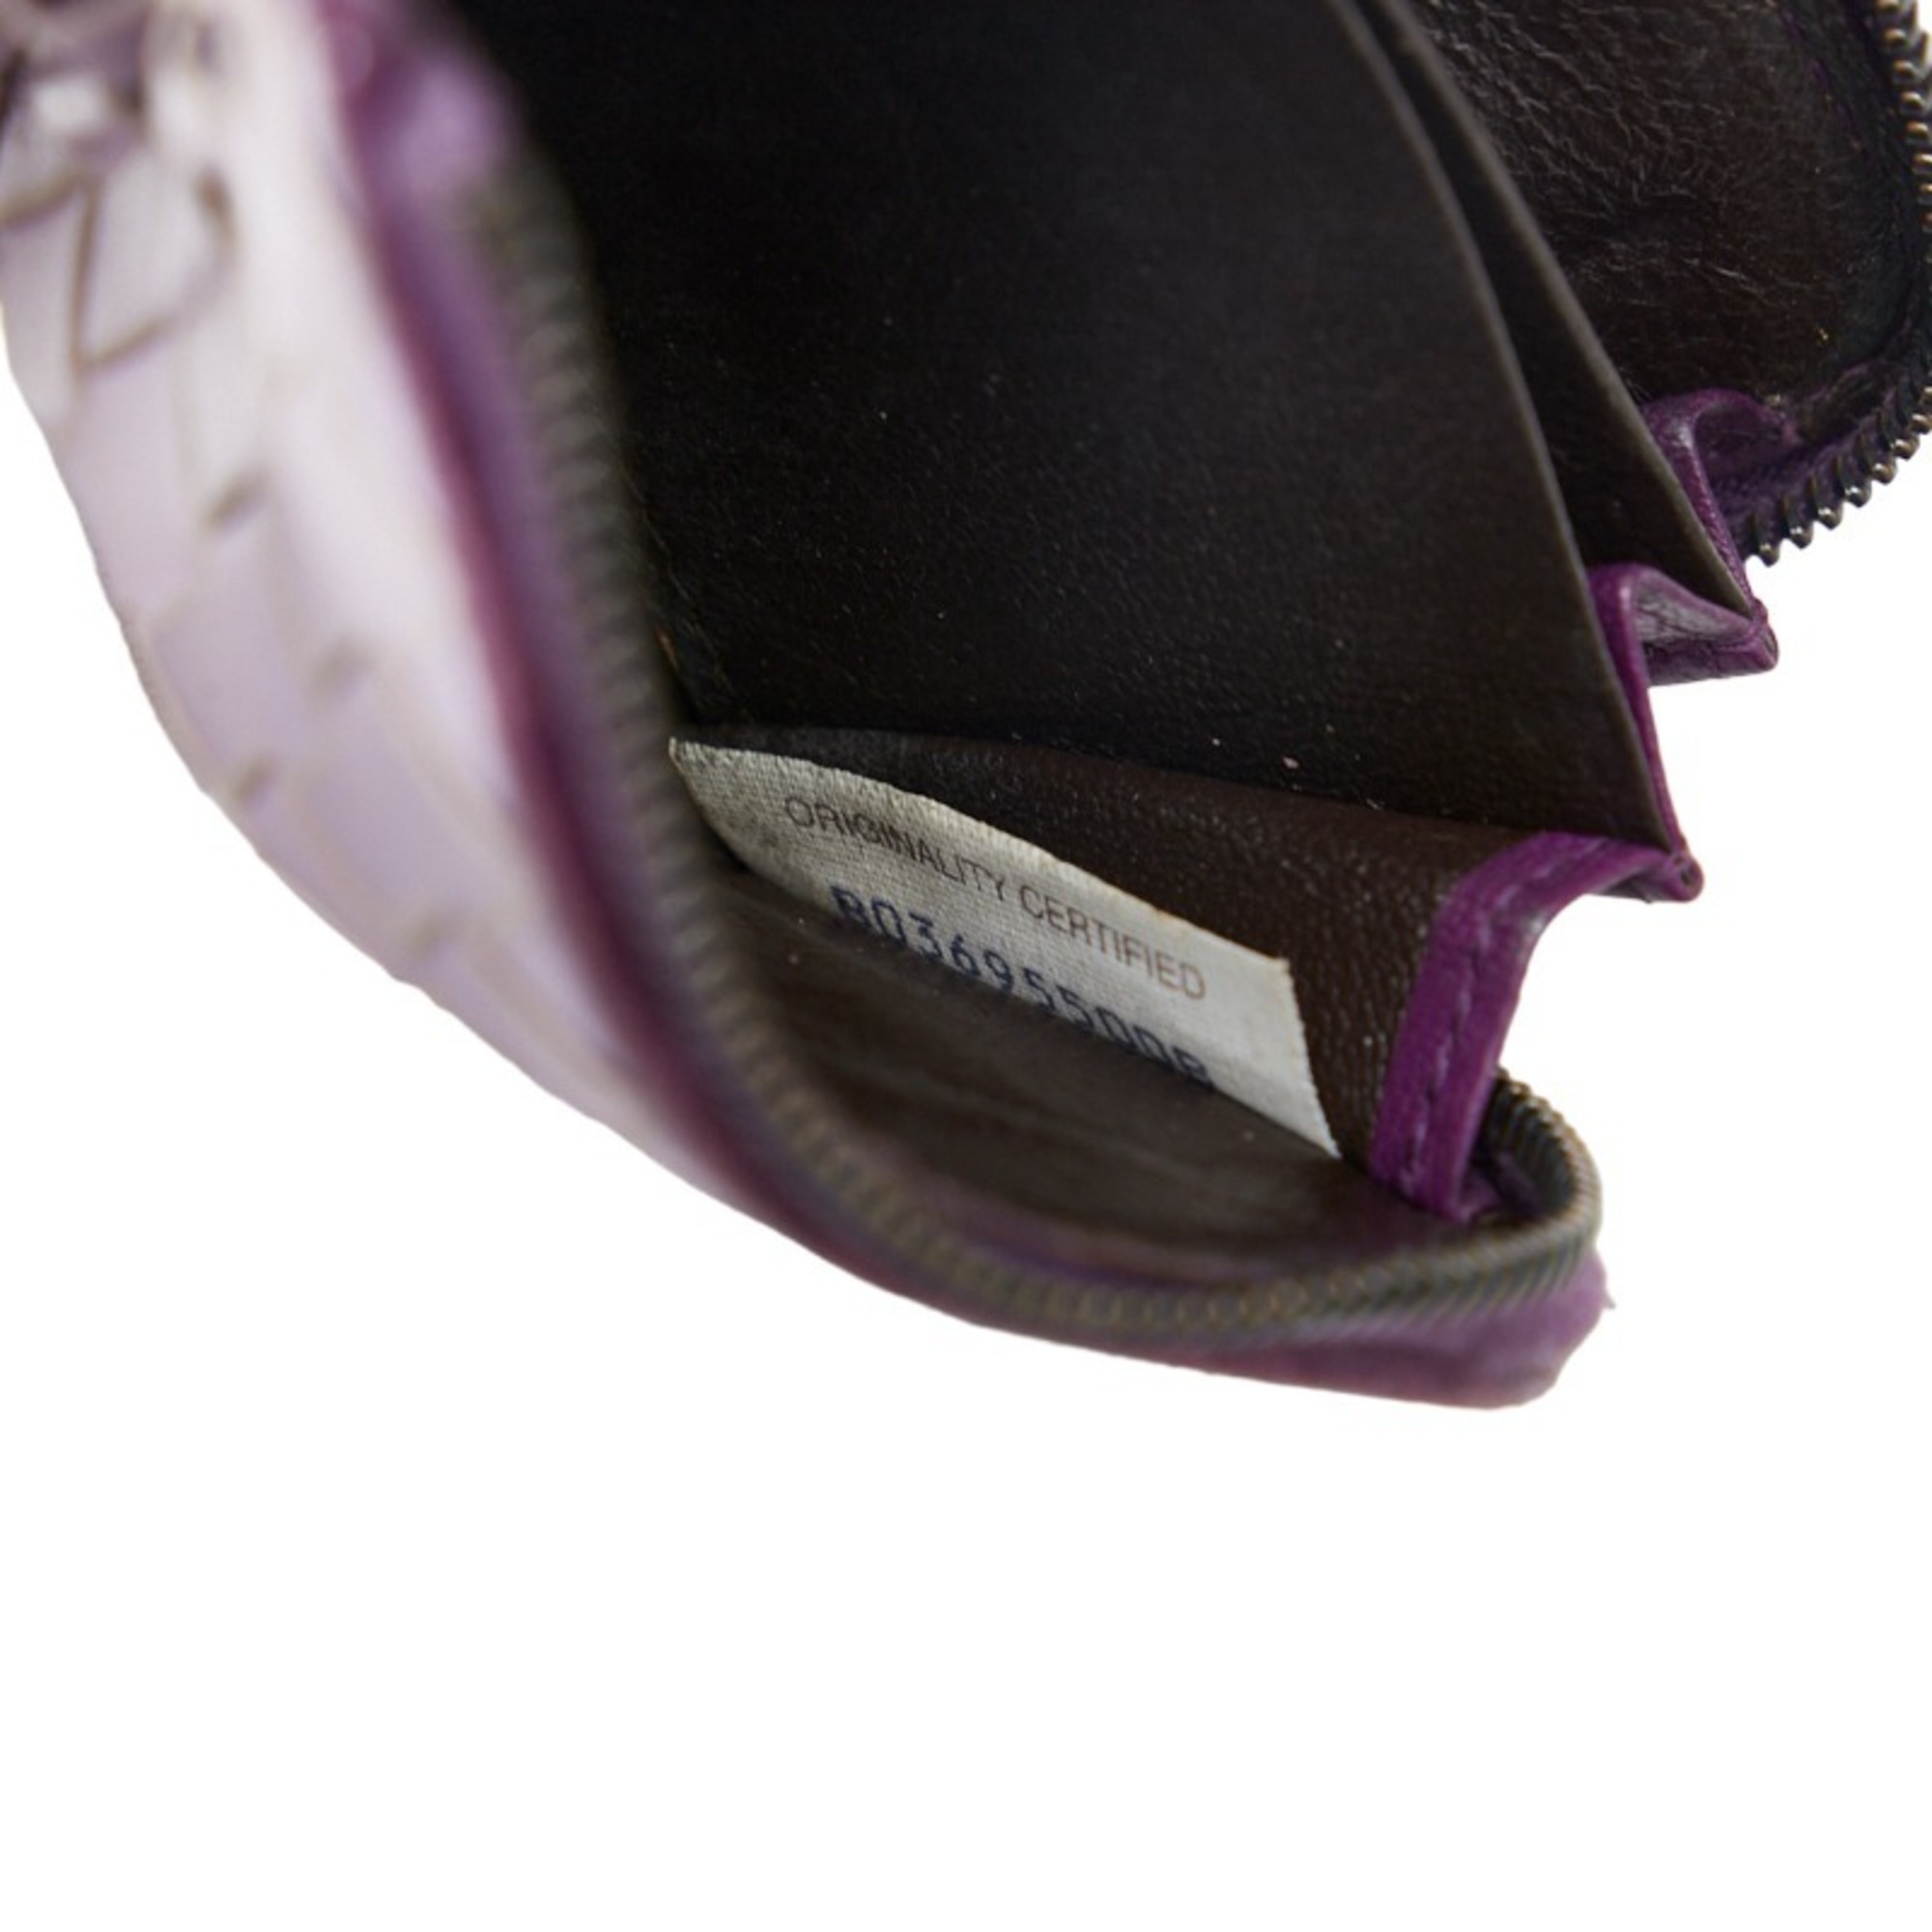 Bottega Veneta BOTTEGAVENETA Intrecciato L-shaped Card Case Pass Purple Leather Women's